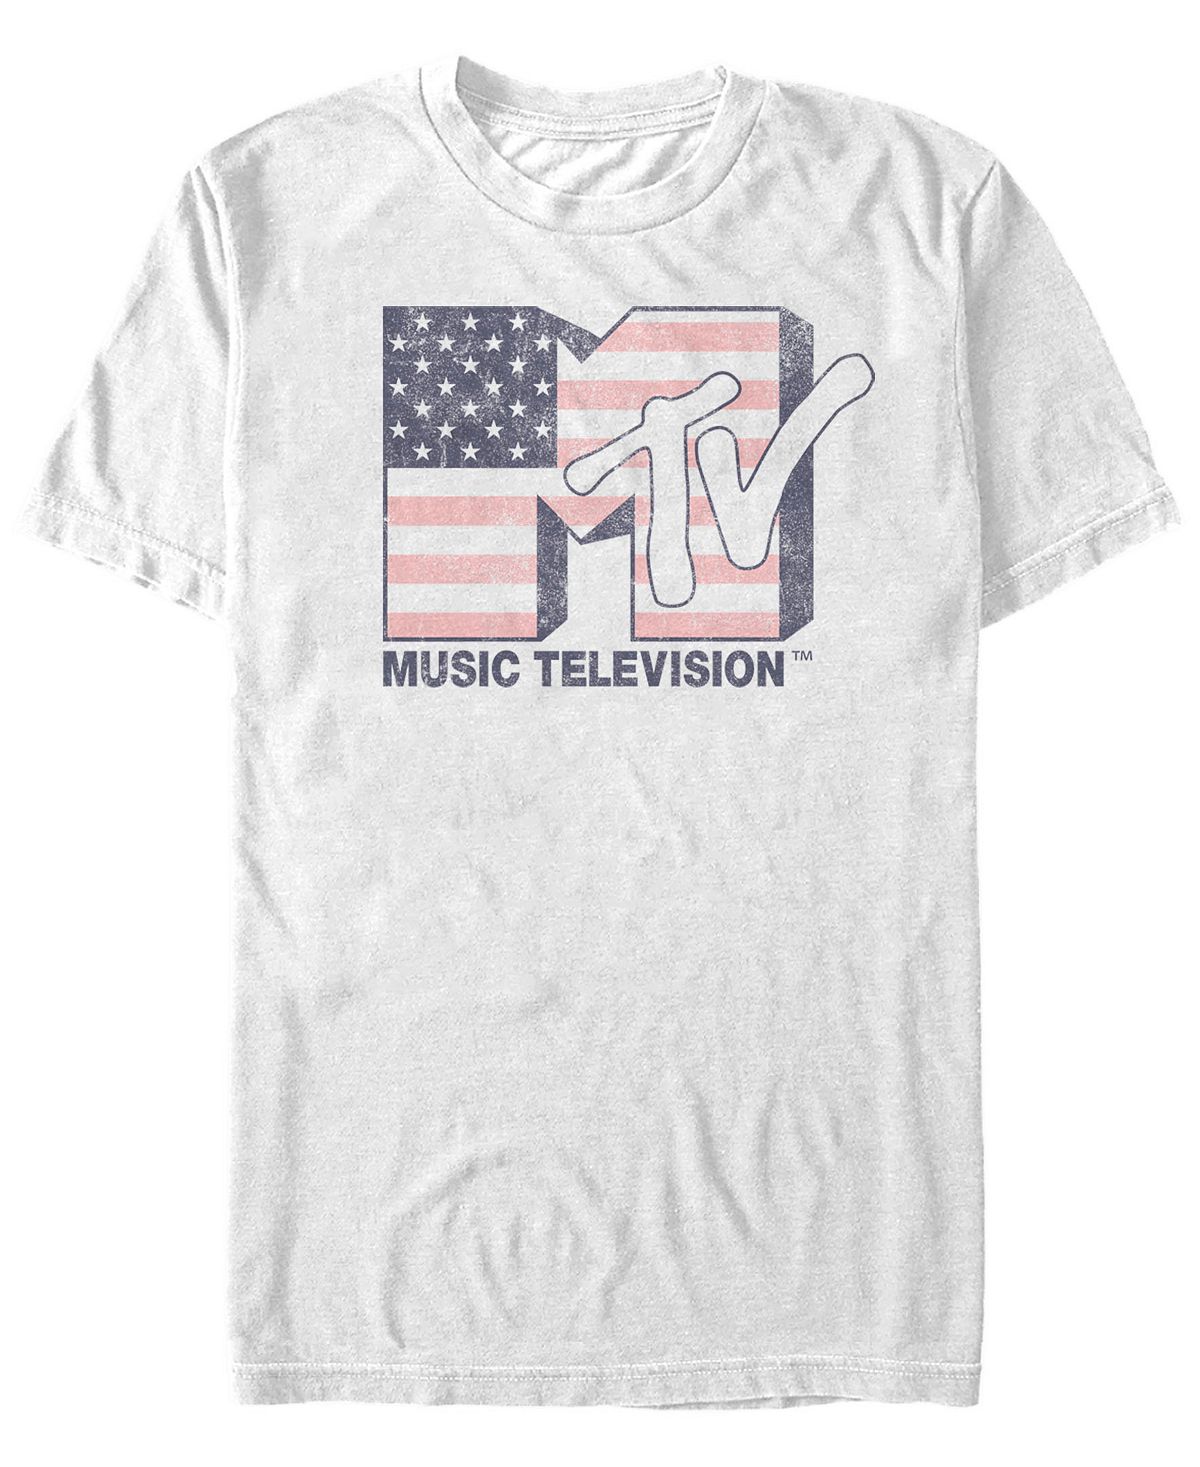 цена Мужская футболка с коротким рукавом с логотипом американского флага mtv Fifth Sun, белый